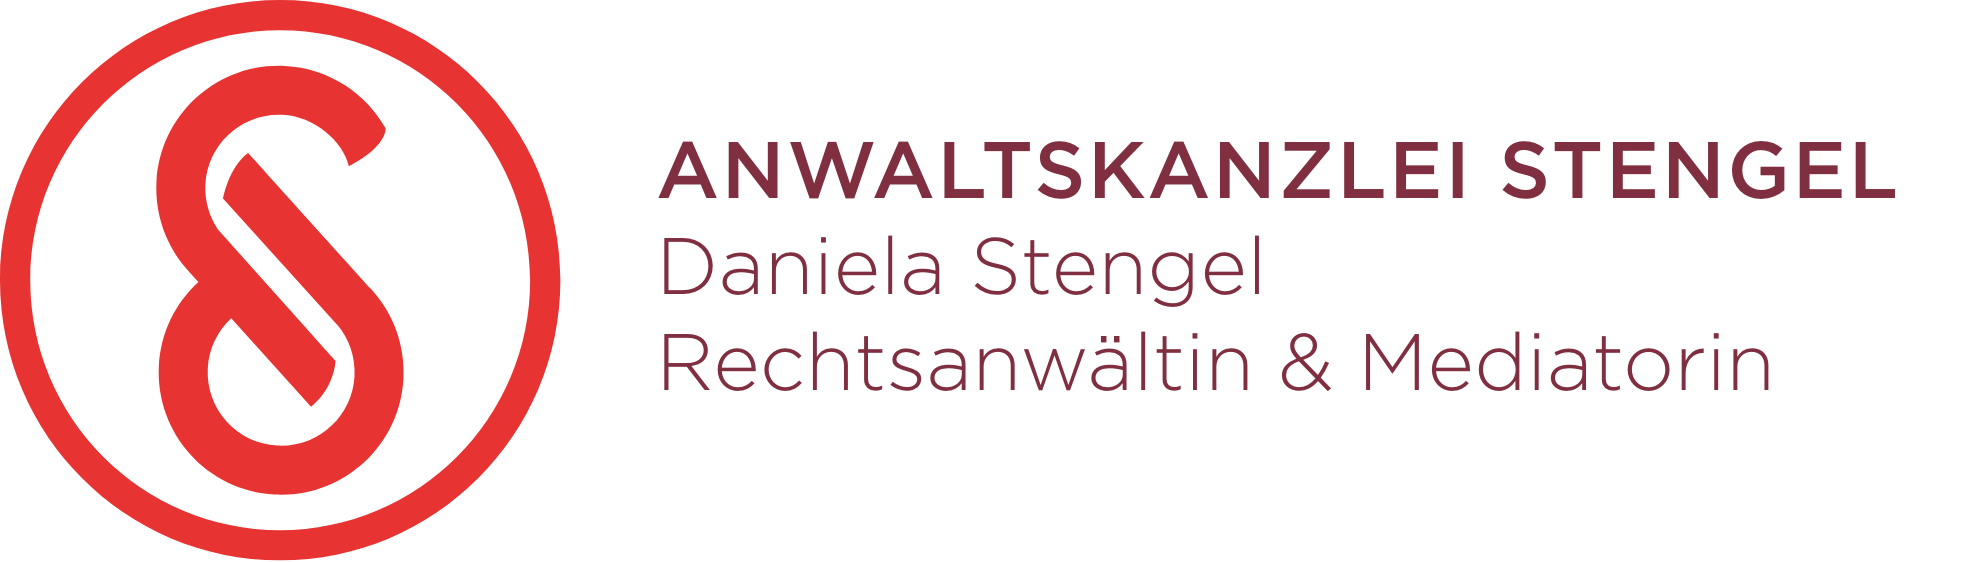 Anwaltskanzlei Stengel logo